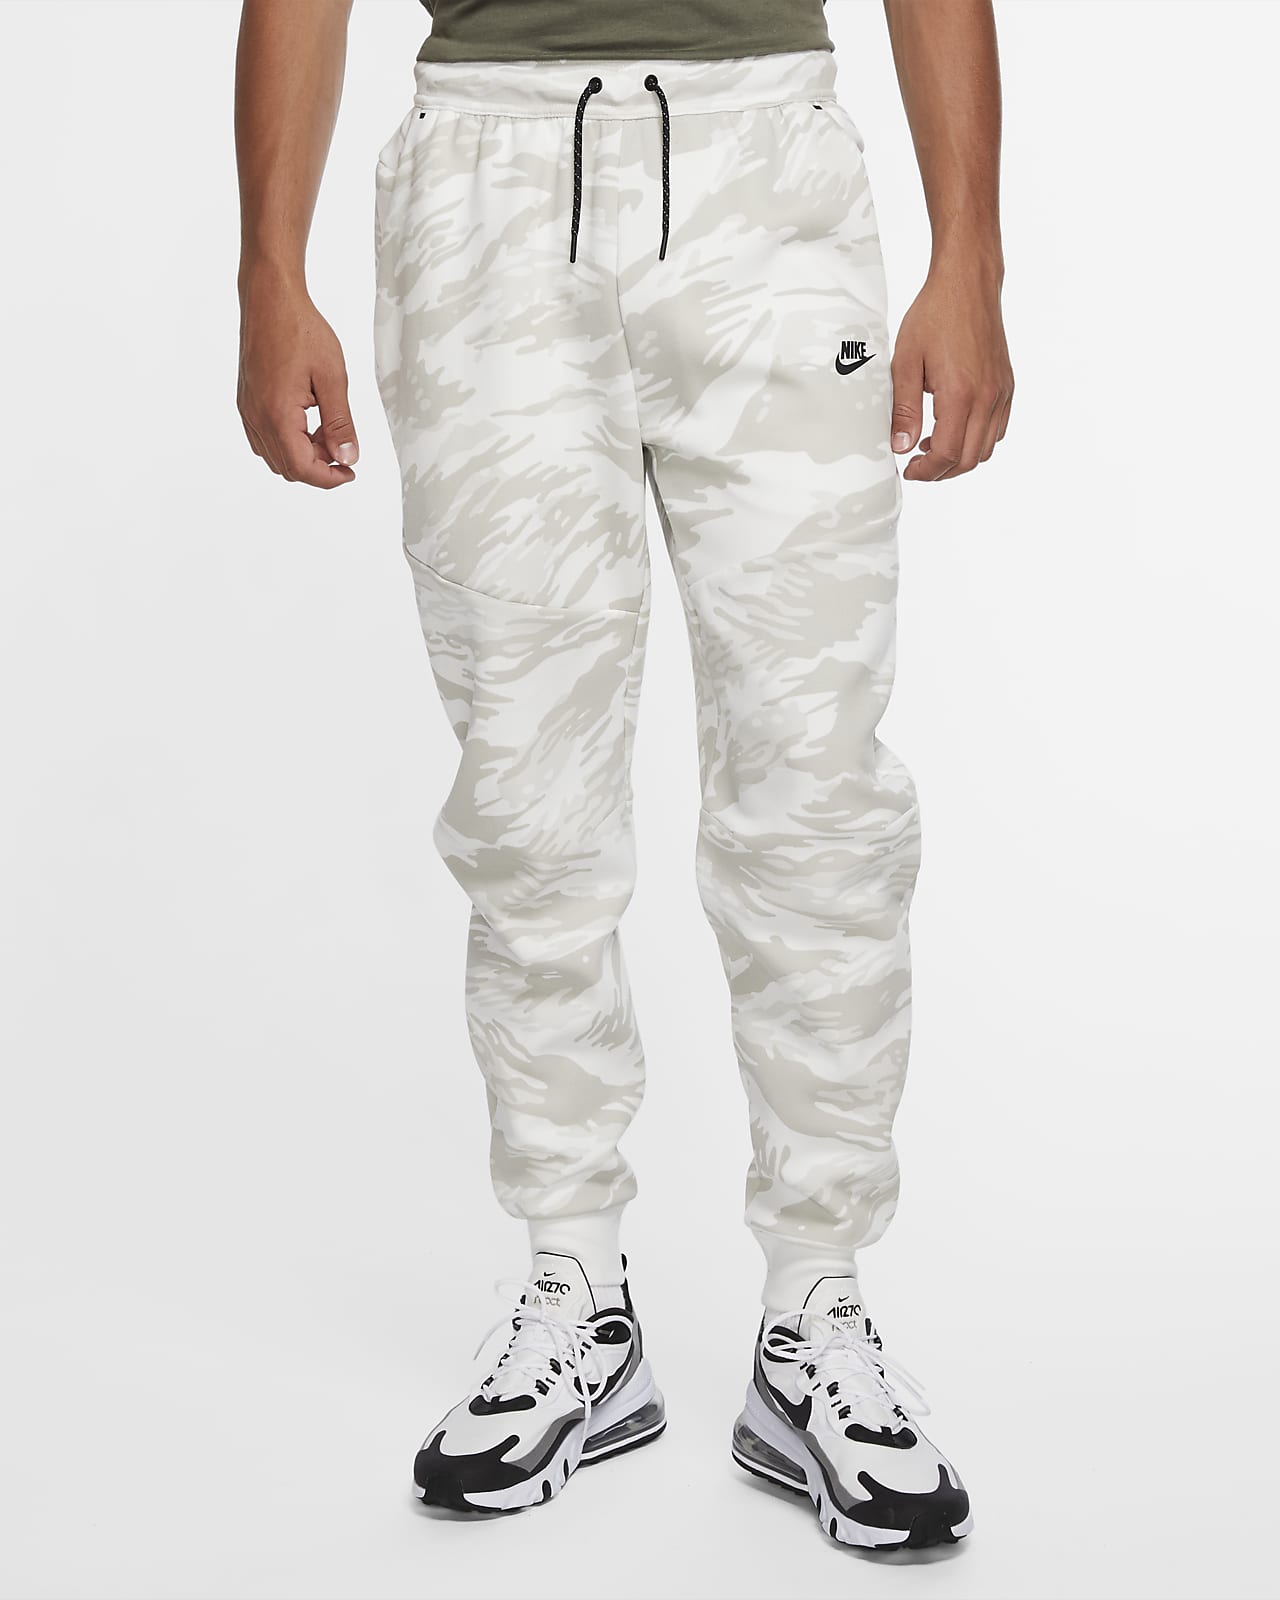 white nike jogging pants